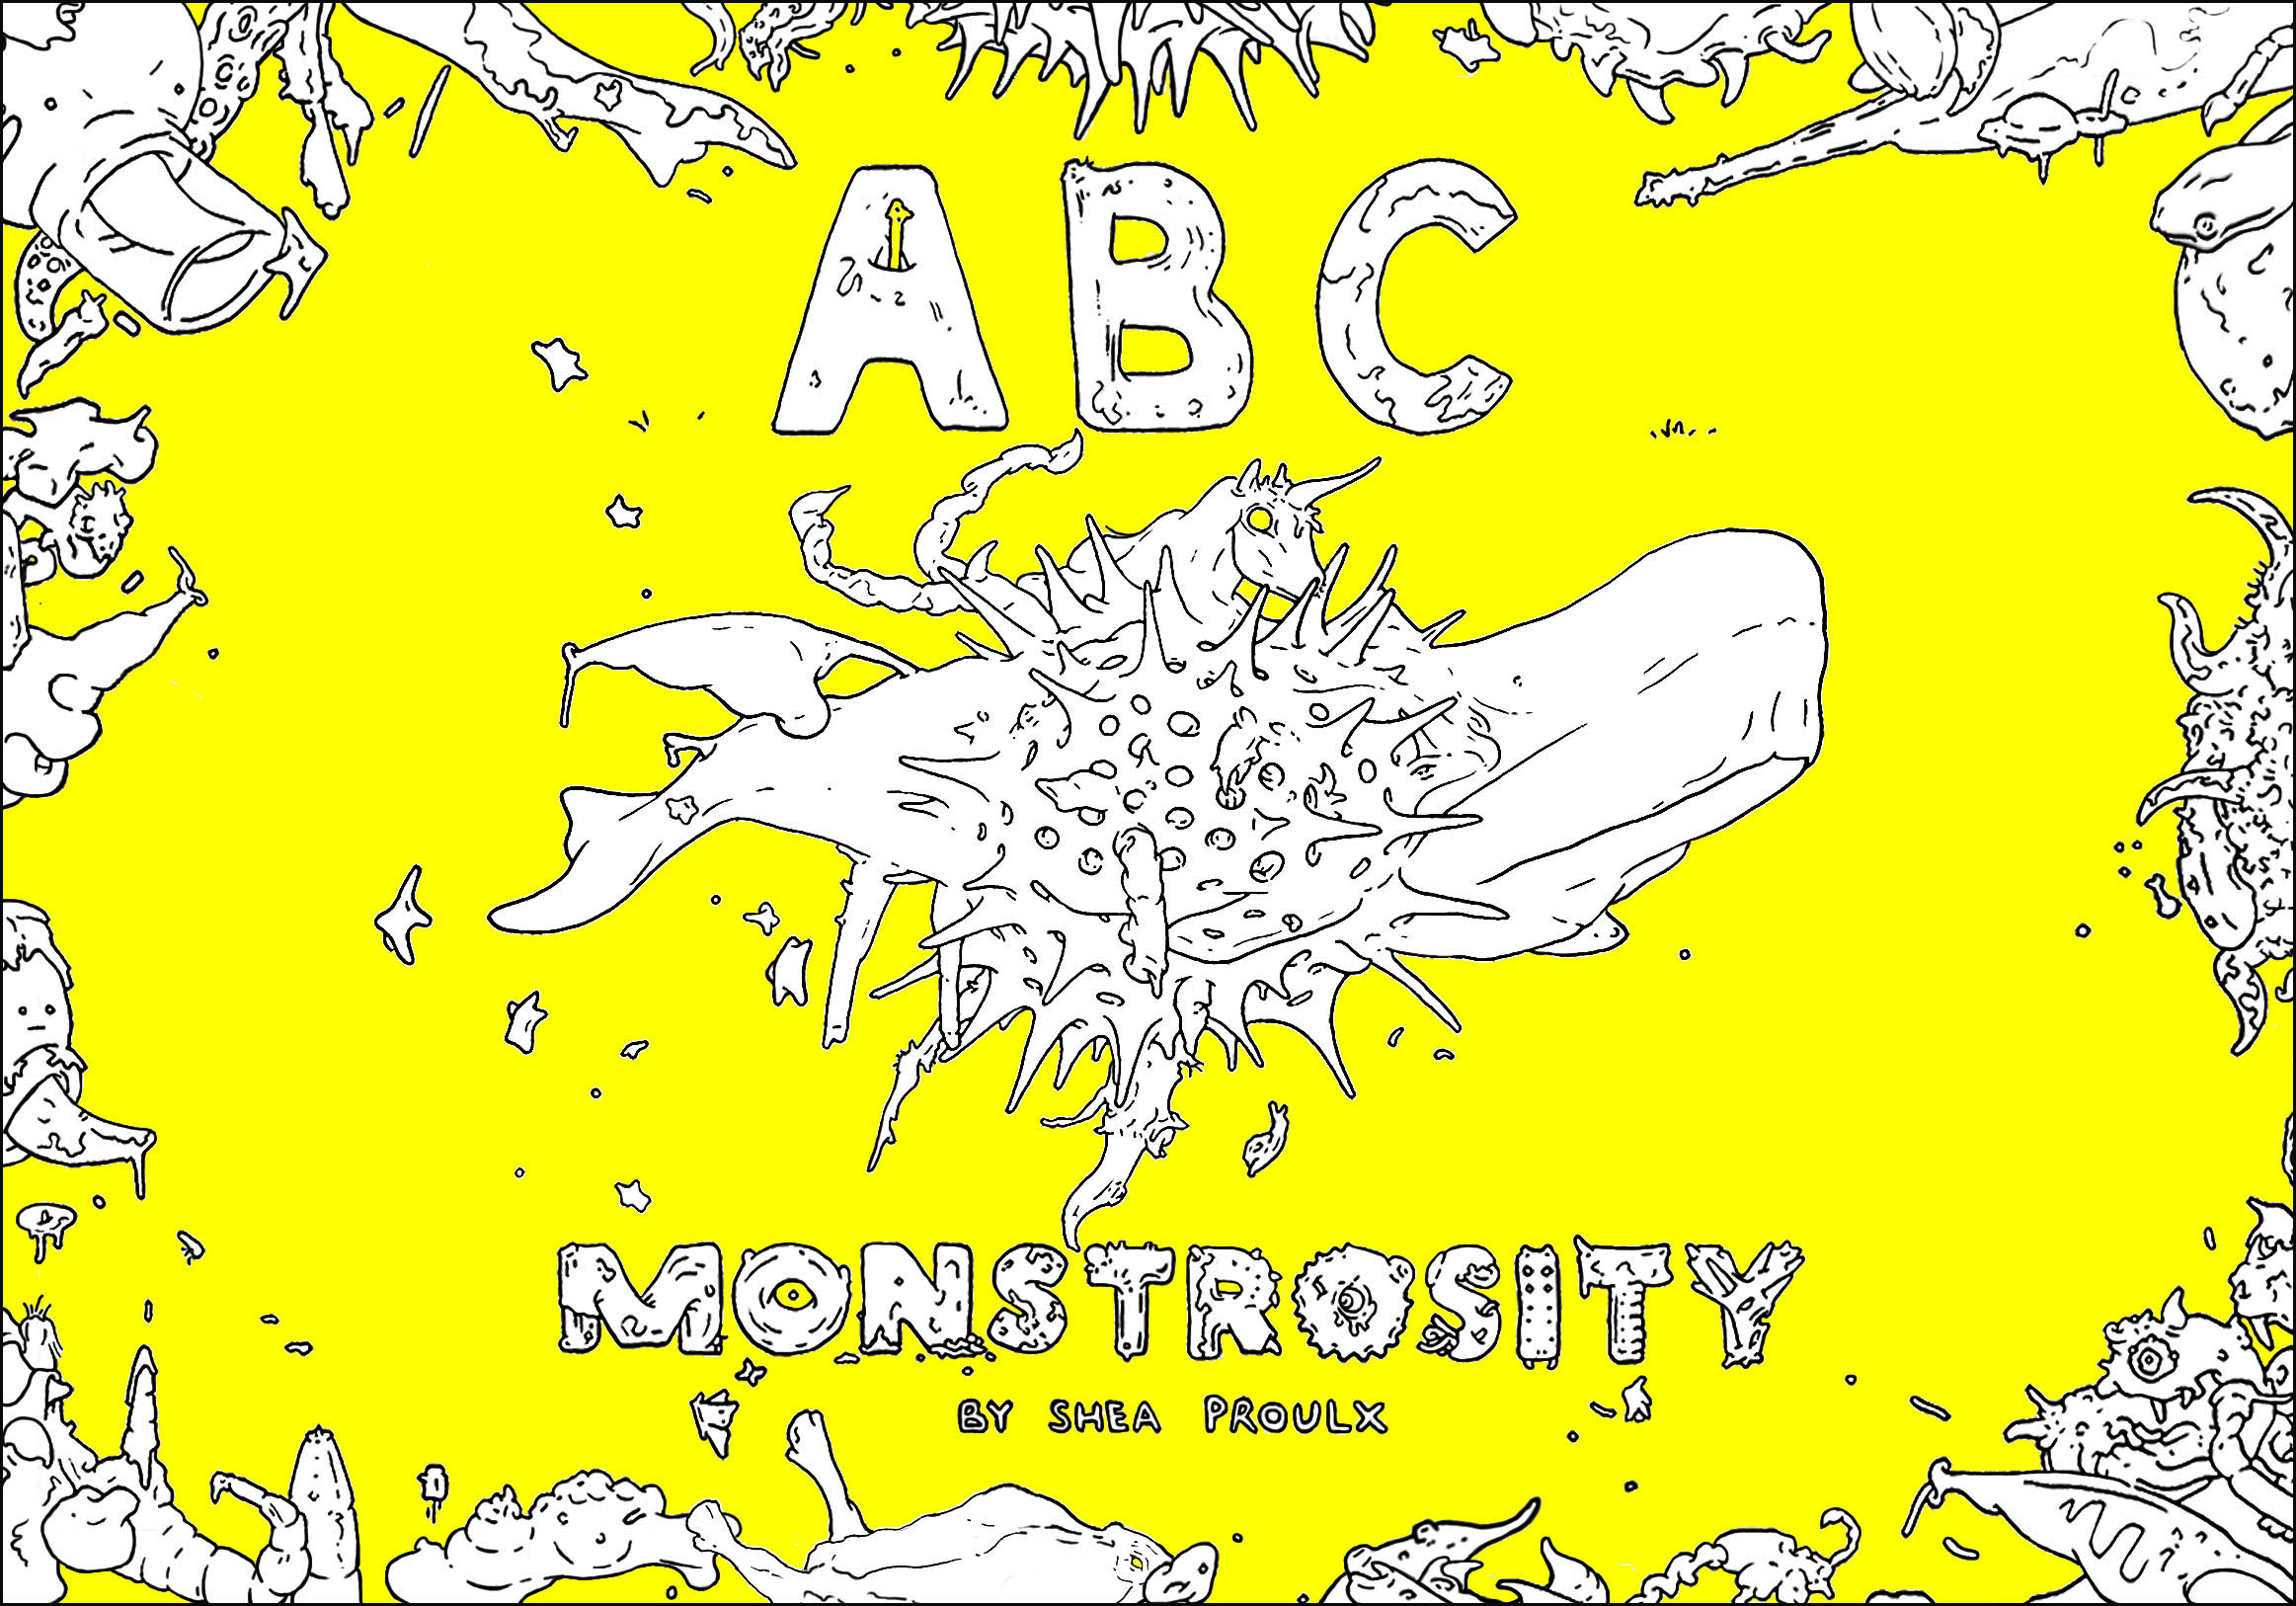 ABC Monstrosity